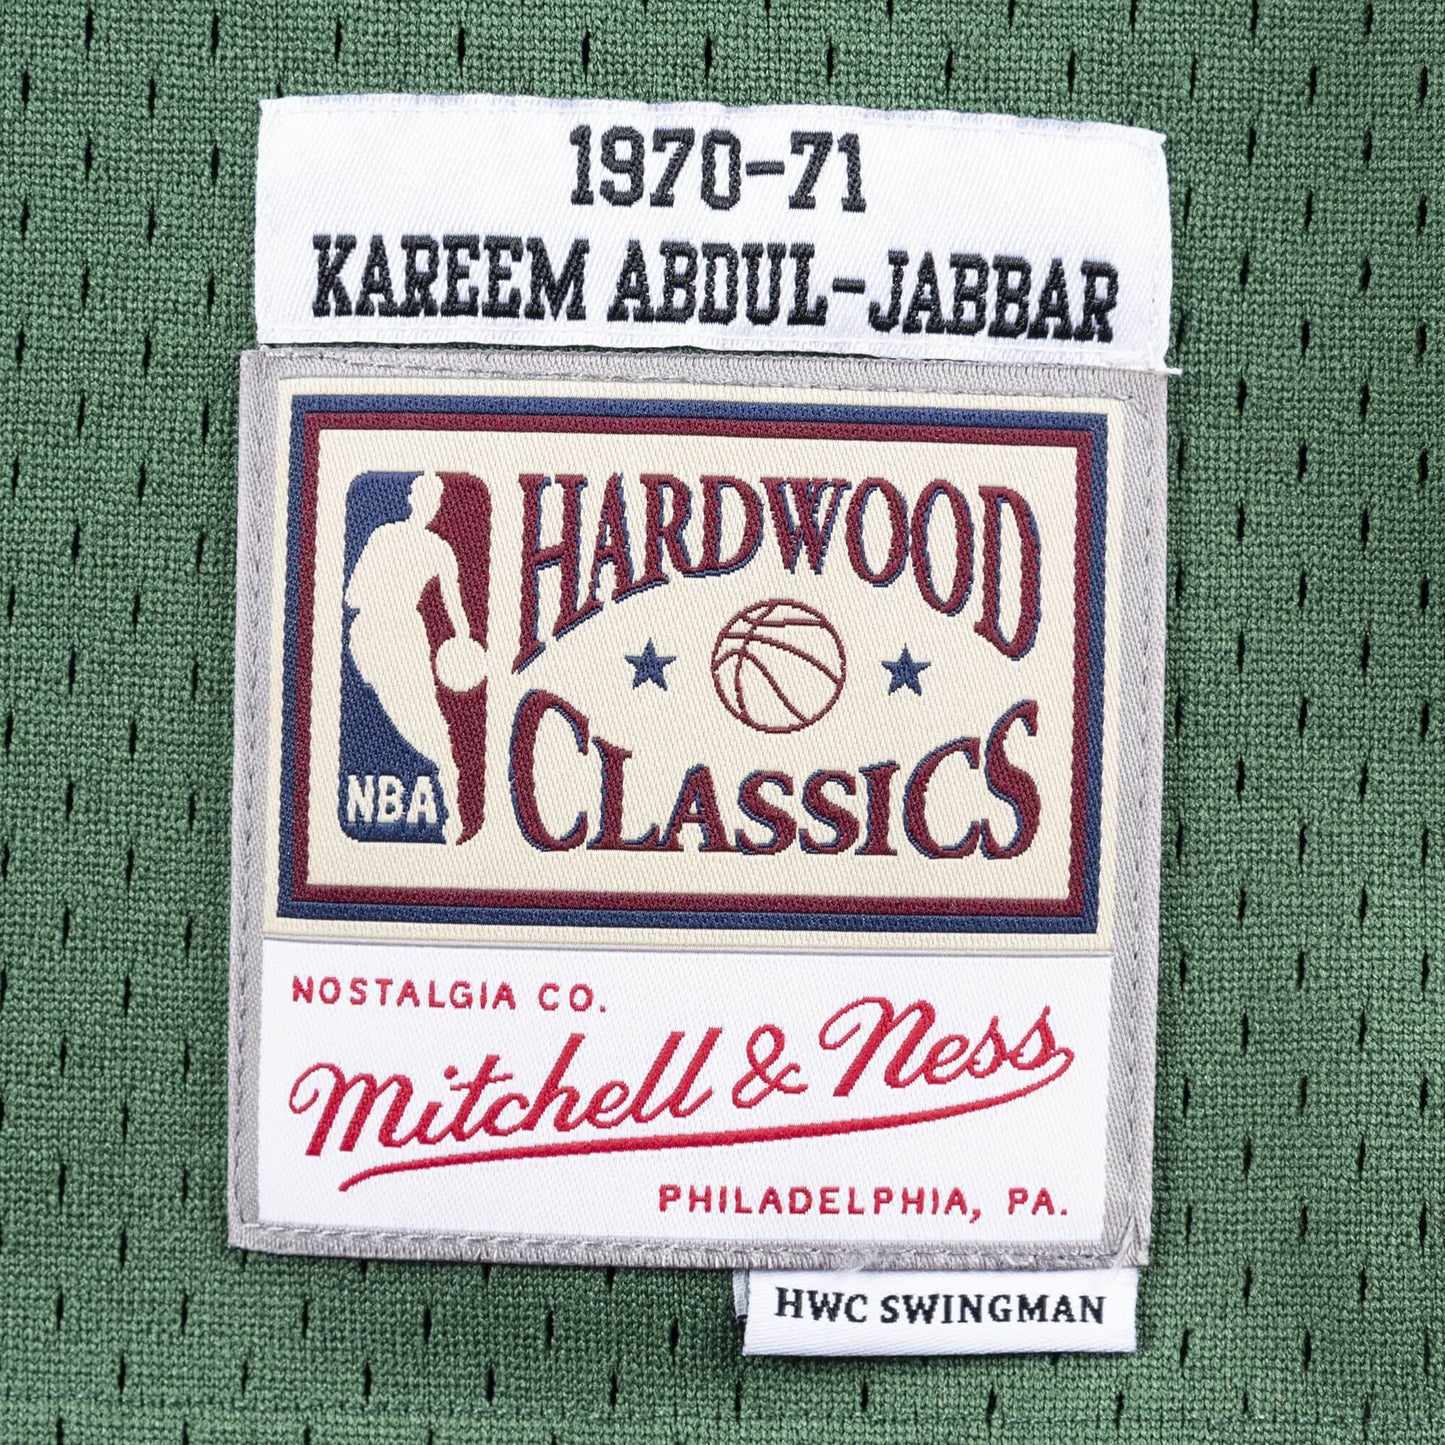 NBA Swingman Jersey Milwaukee Bucks Away 1970-71 Kareem Abdul-Jabbar